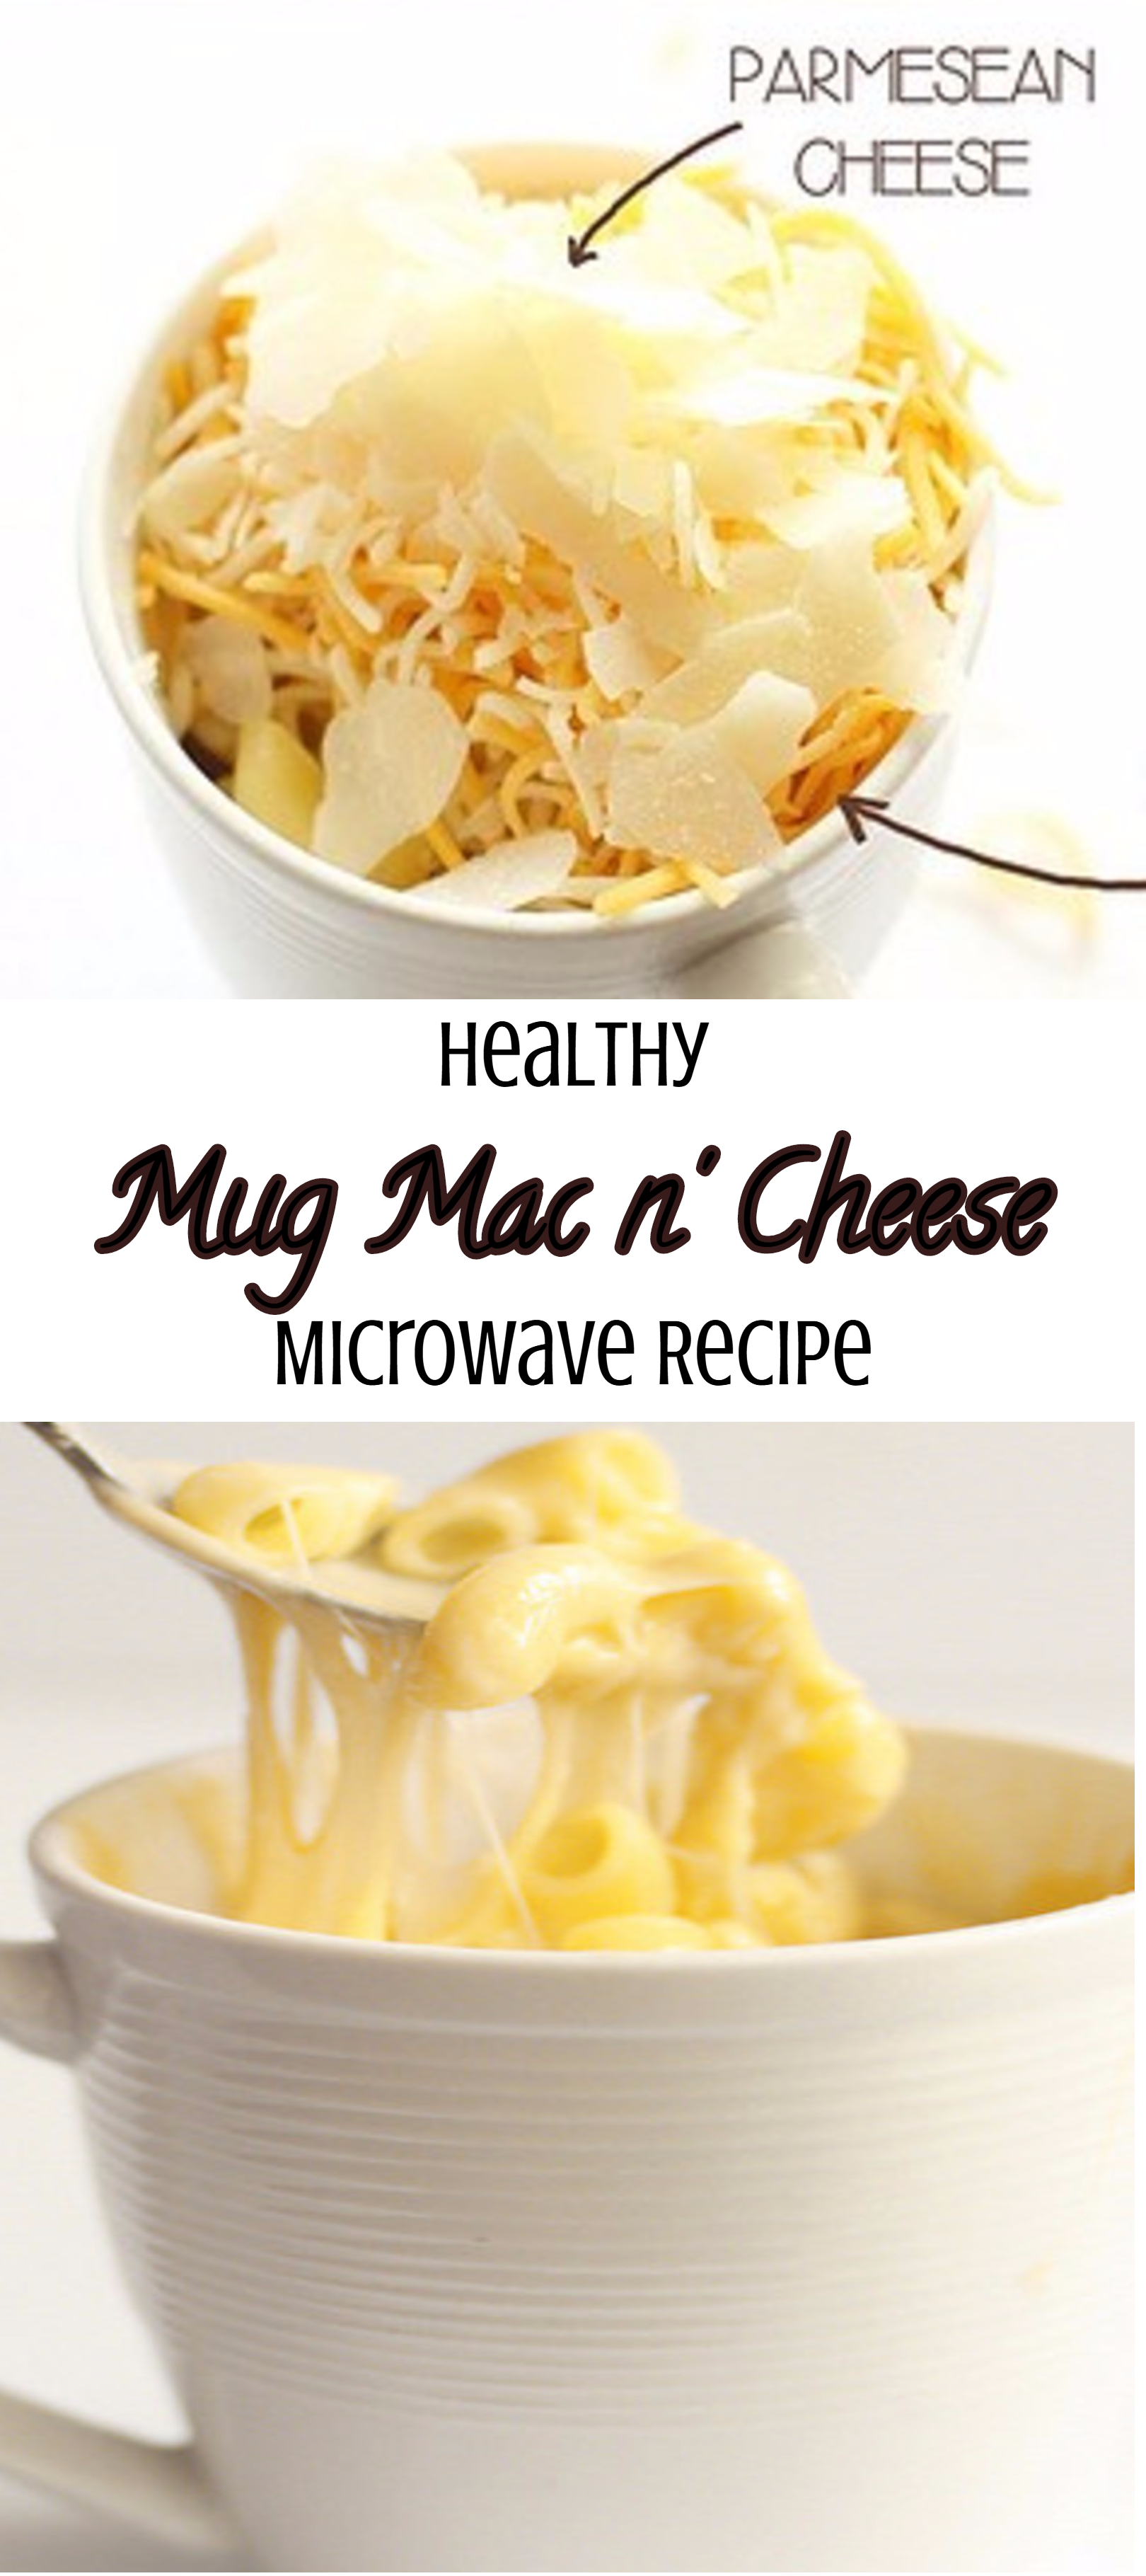 Healthy homemade mug mac n cheese in a microwave recipe